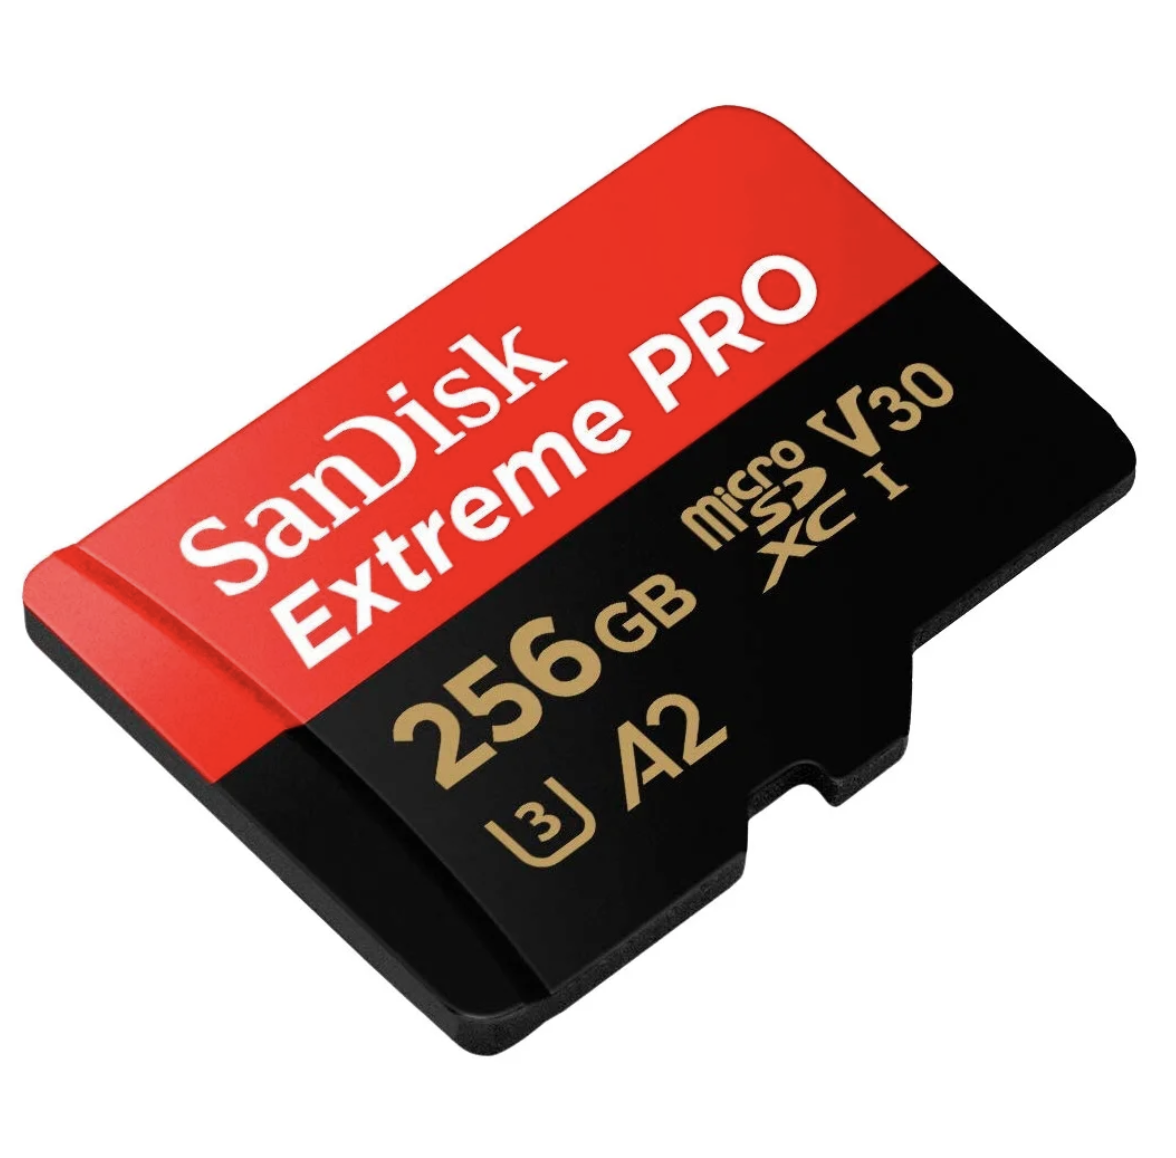 Купить карту памяти на 64 гб. Карта памяти SANDISK extreme Pro 128gb. SANDISK extreme MICROSDXC 64gb. Карта памяти SANDISK extreme Pro MICROSDXC class 10 UHS class 3 v30 a2 170mb/s 400gb + SD Adapter. SANDISK 256gb extreme Pro UHS-I u3 SDXC.